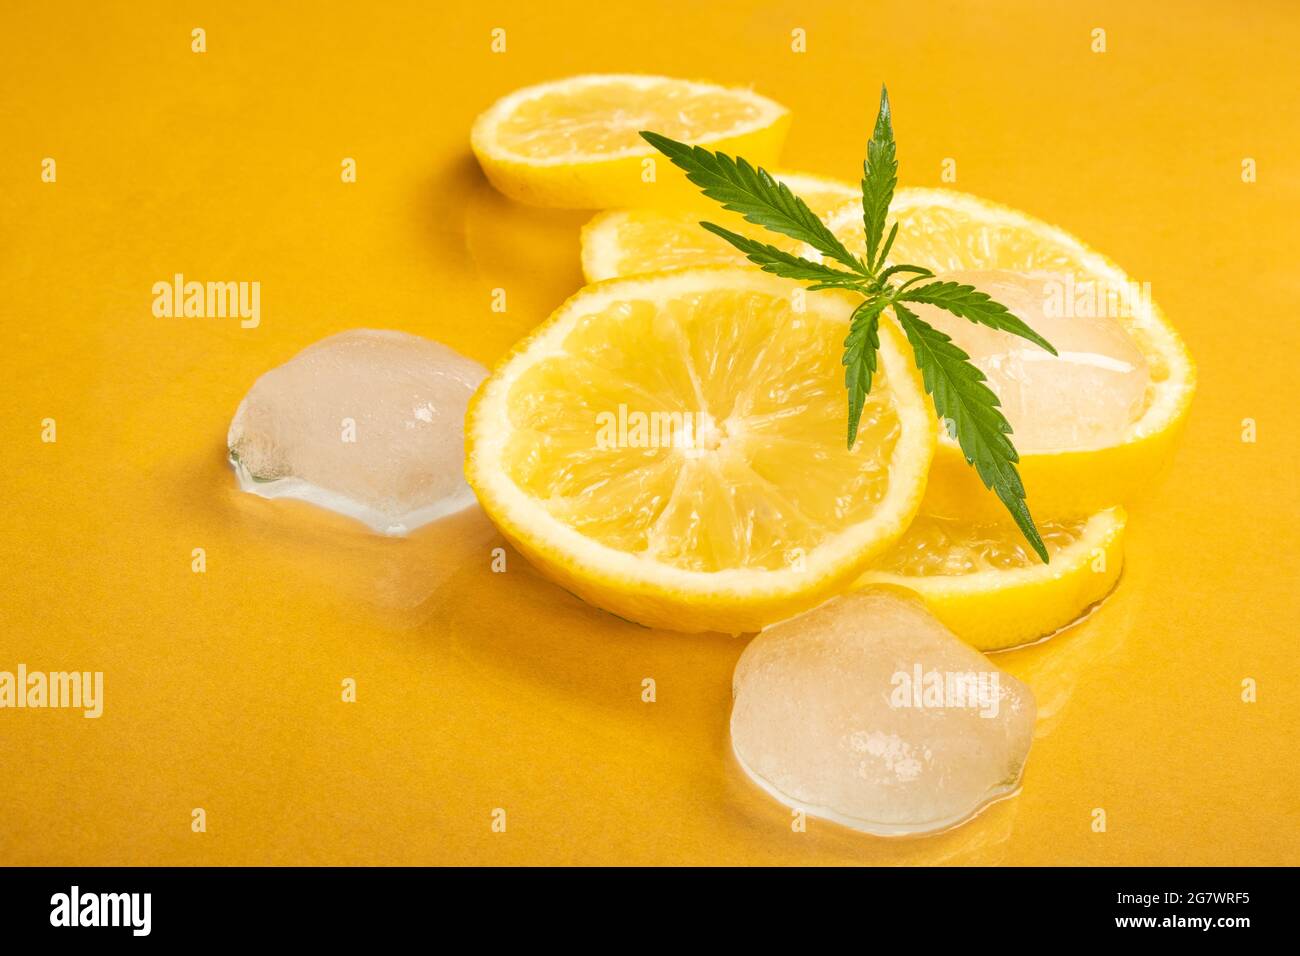 Óptima asignación Agregar cuñas de limón con cubitos de hielo y abadón de marihuana sobre fondo  amarillo, cáñamo de limón, cannabis con aroma de cítricos Fotografía de  stock - Alamy